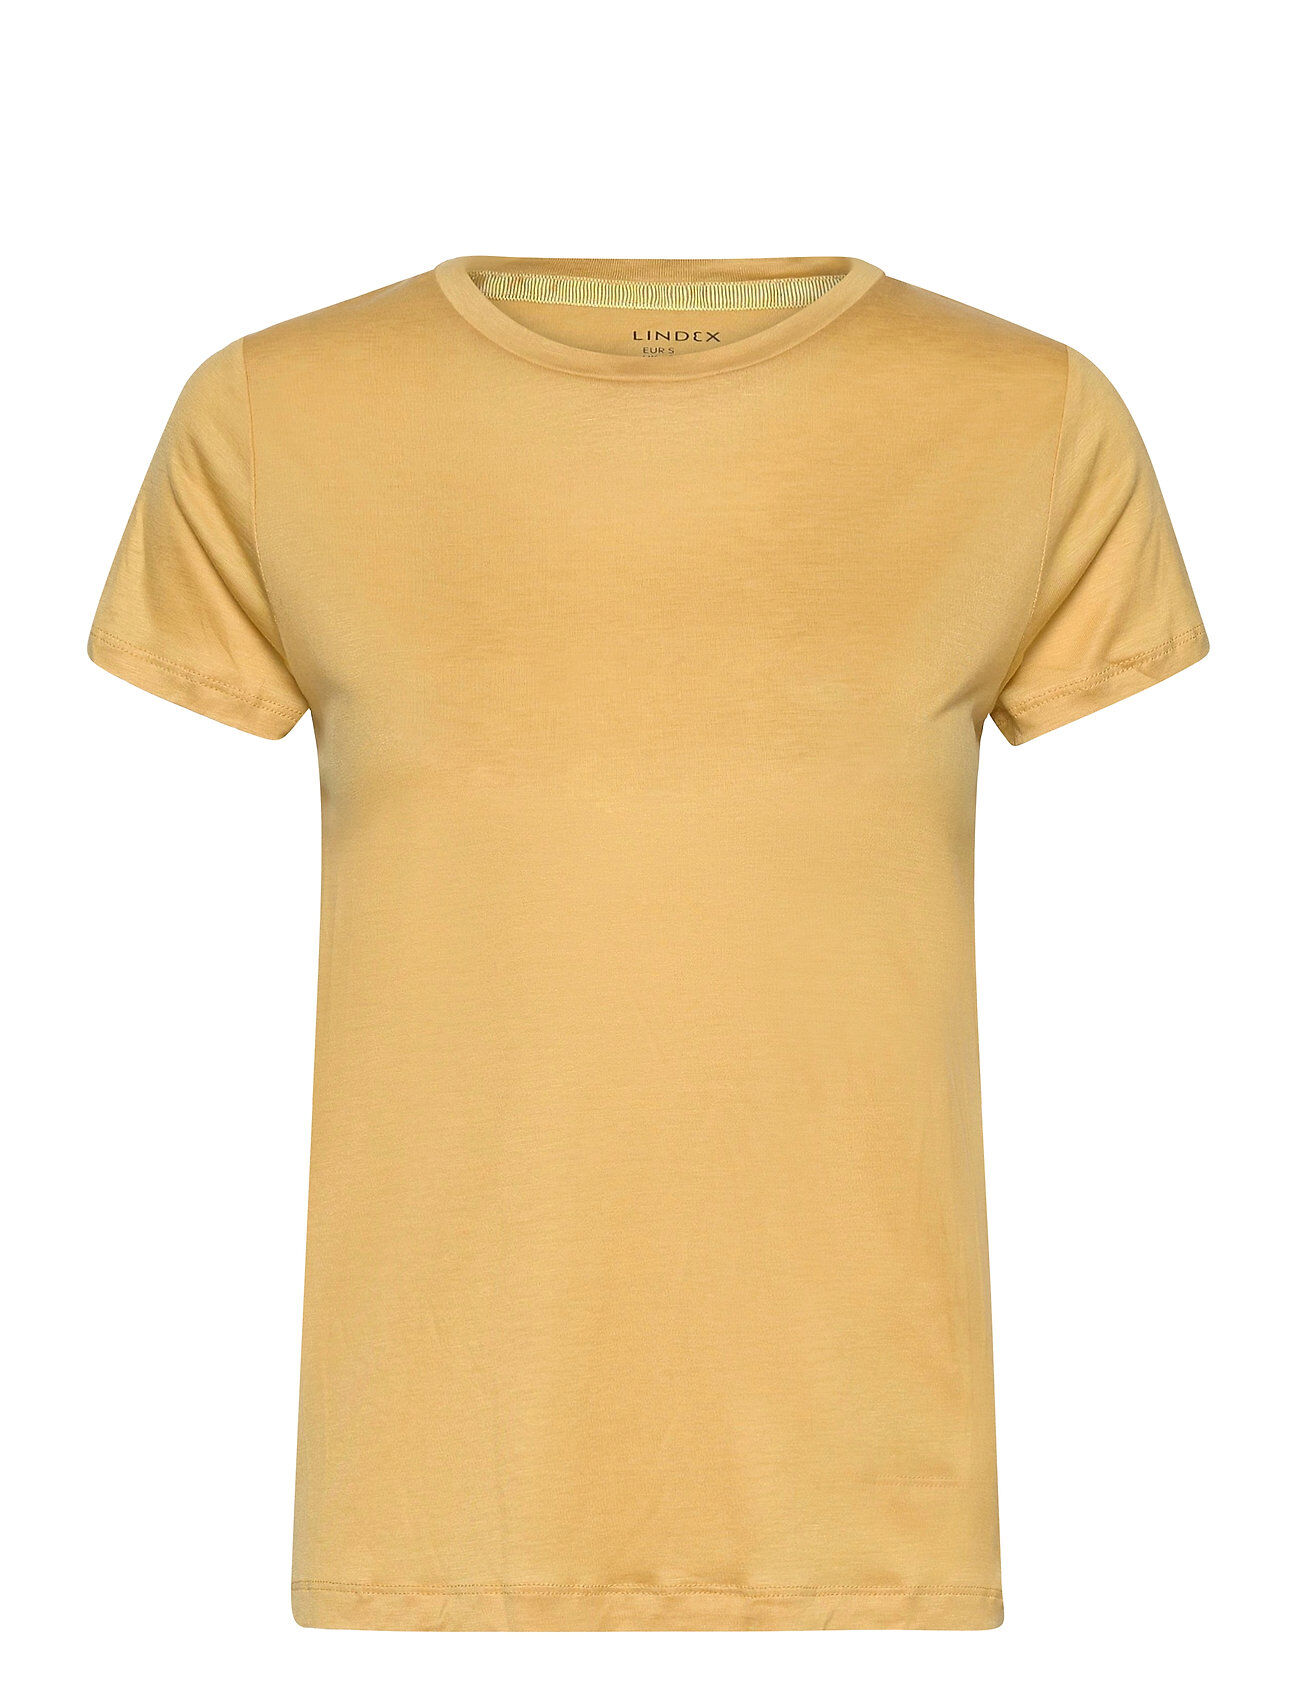 Lindex Top Tom T-shirts & Tops Short-sleeved Gul Lindex